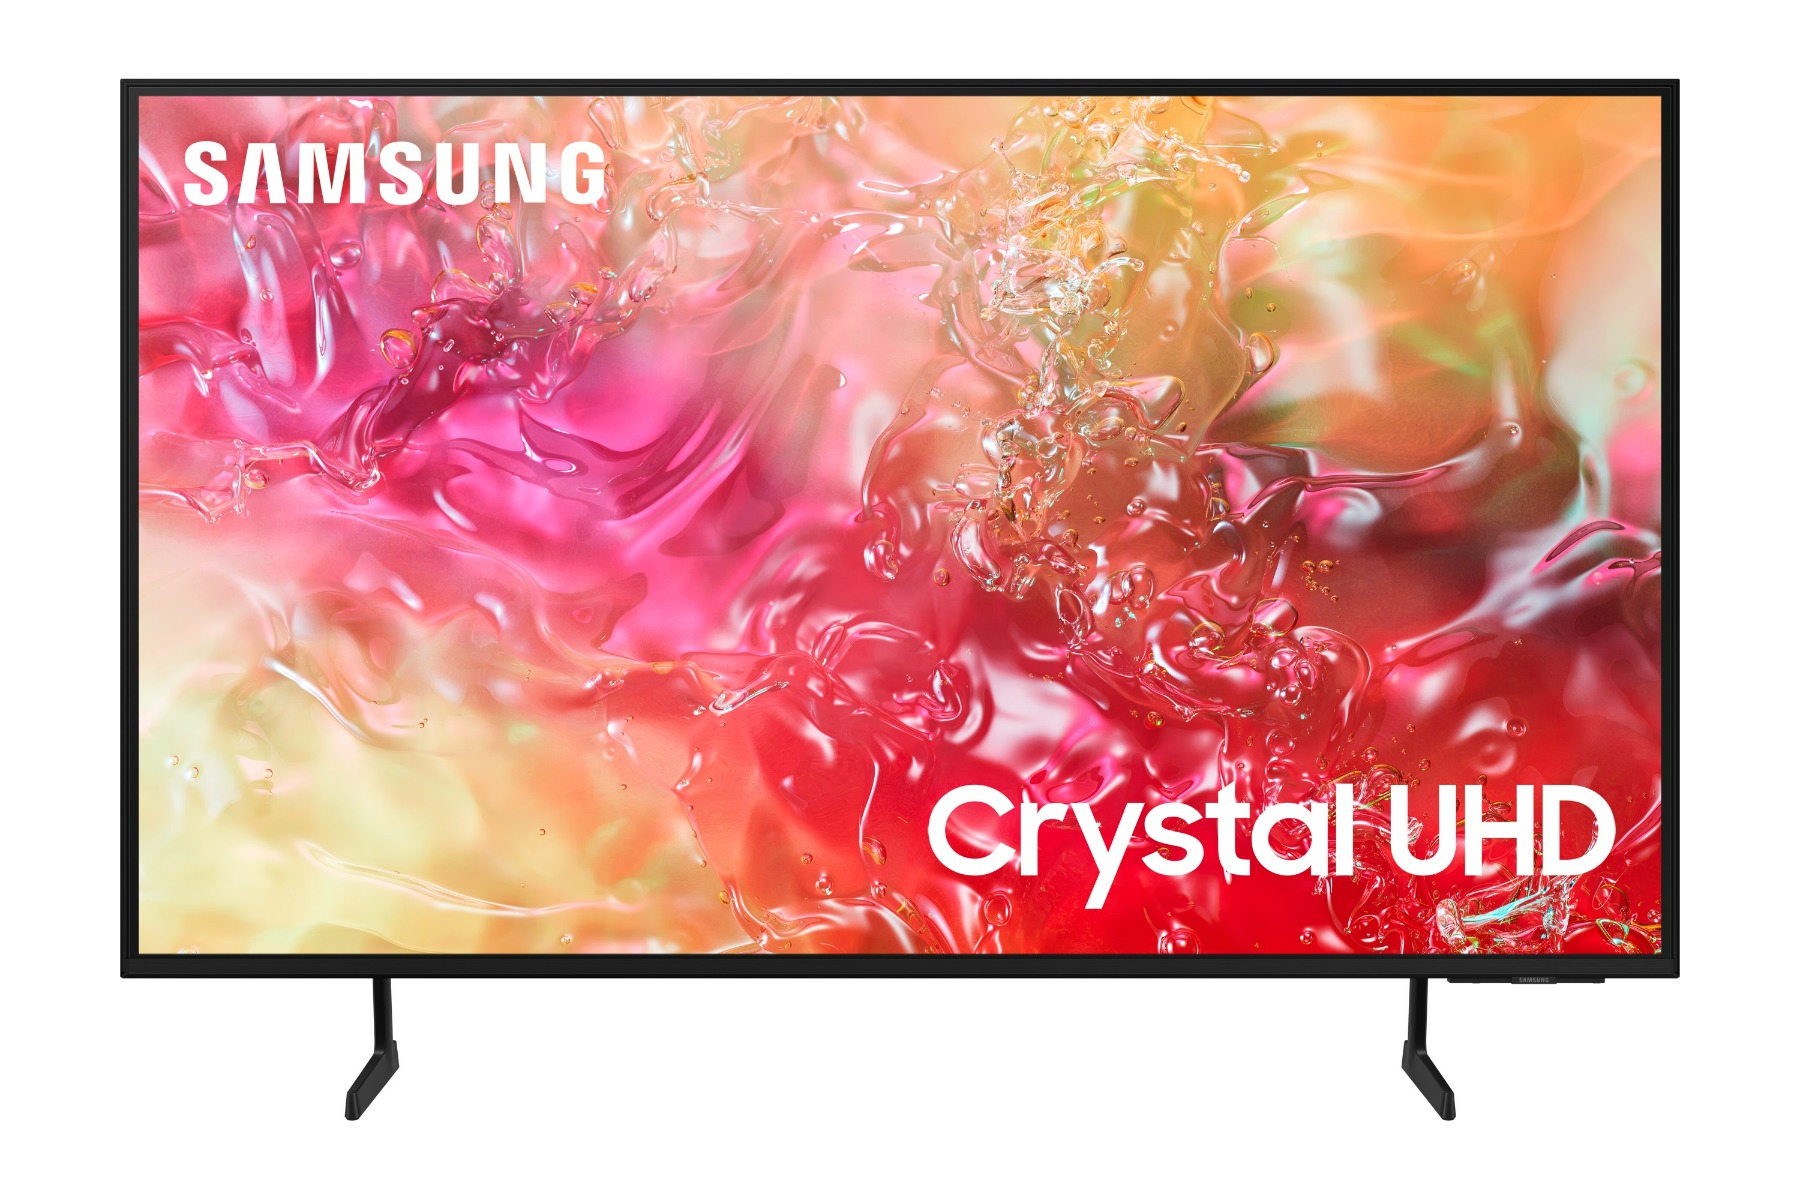 Samsung 65 Inch 4K UHD Smart LED TV with Built-in Receiver - 65DU7000